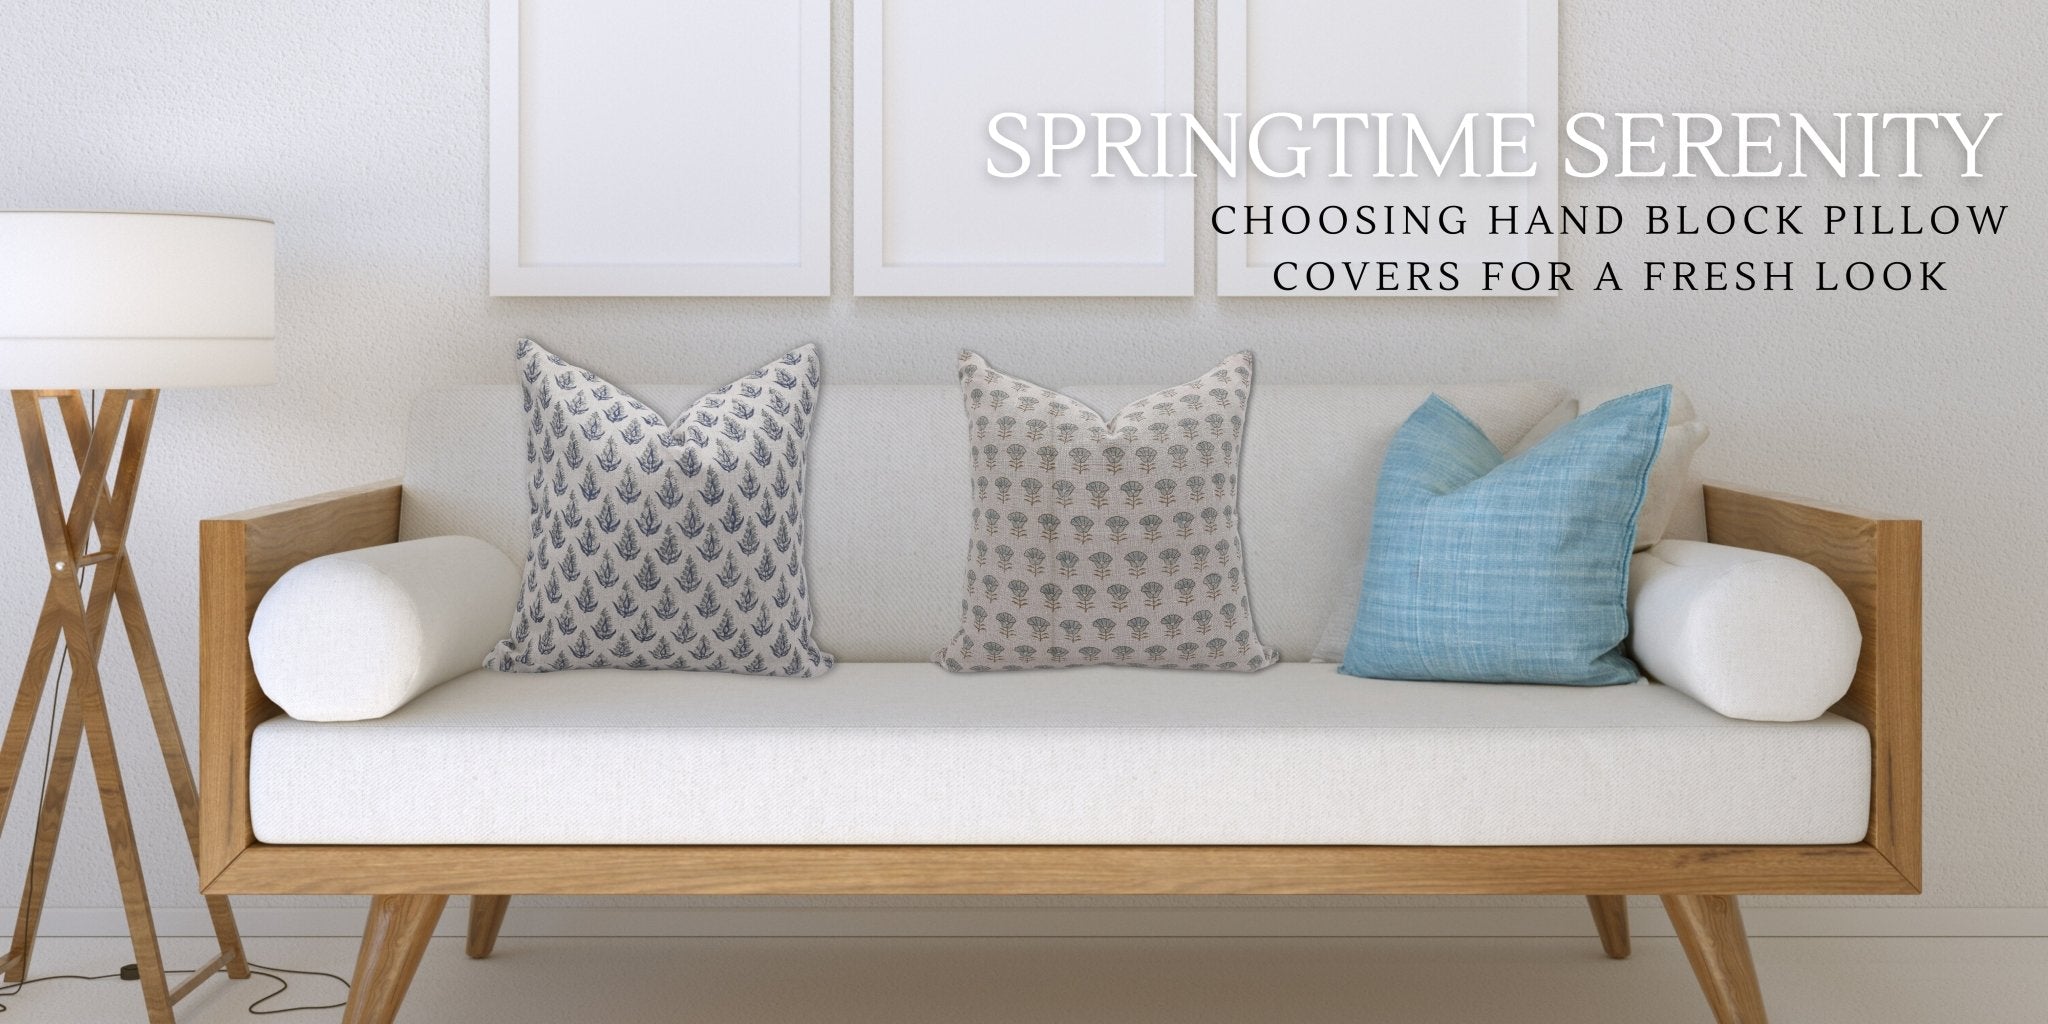 Springtime Serenity: Choosing Hand Block Pillow Covers for a Fresh Look - FABDIVINE LLC